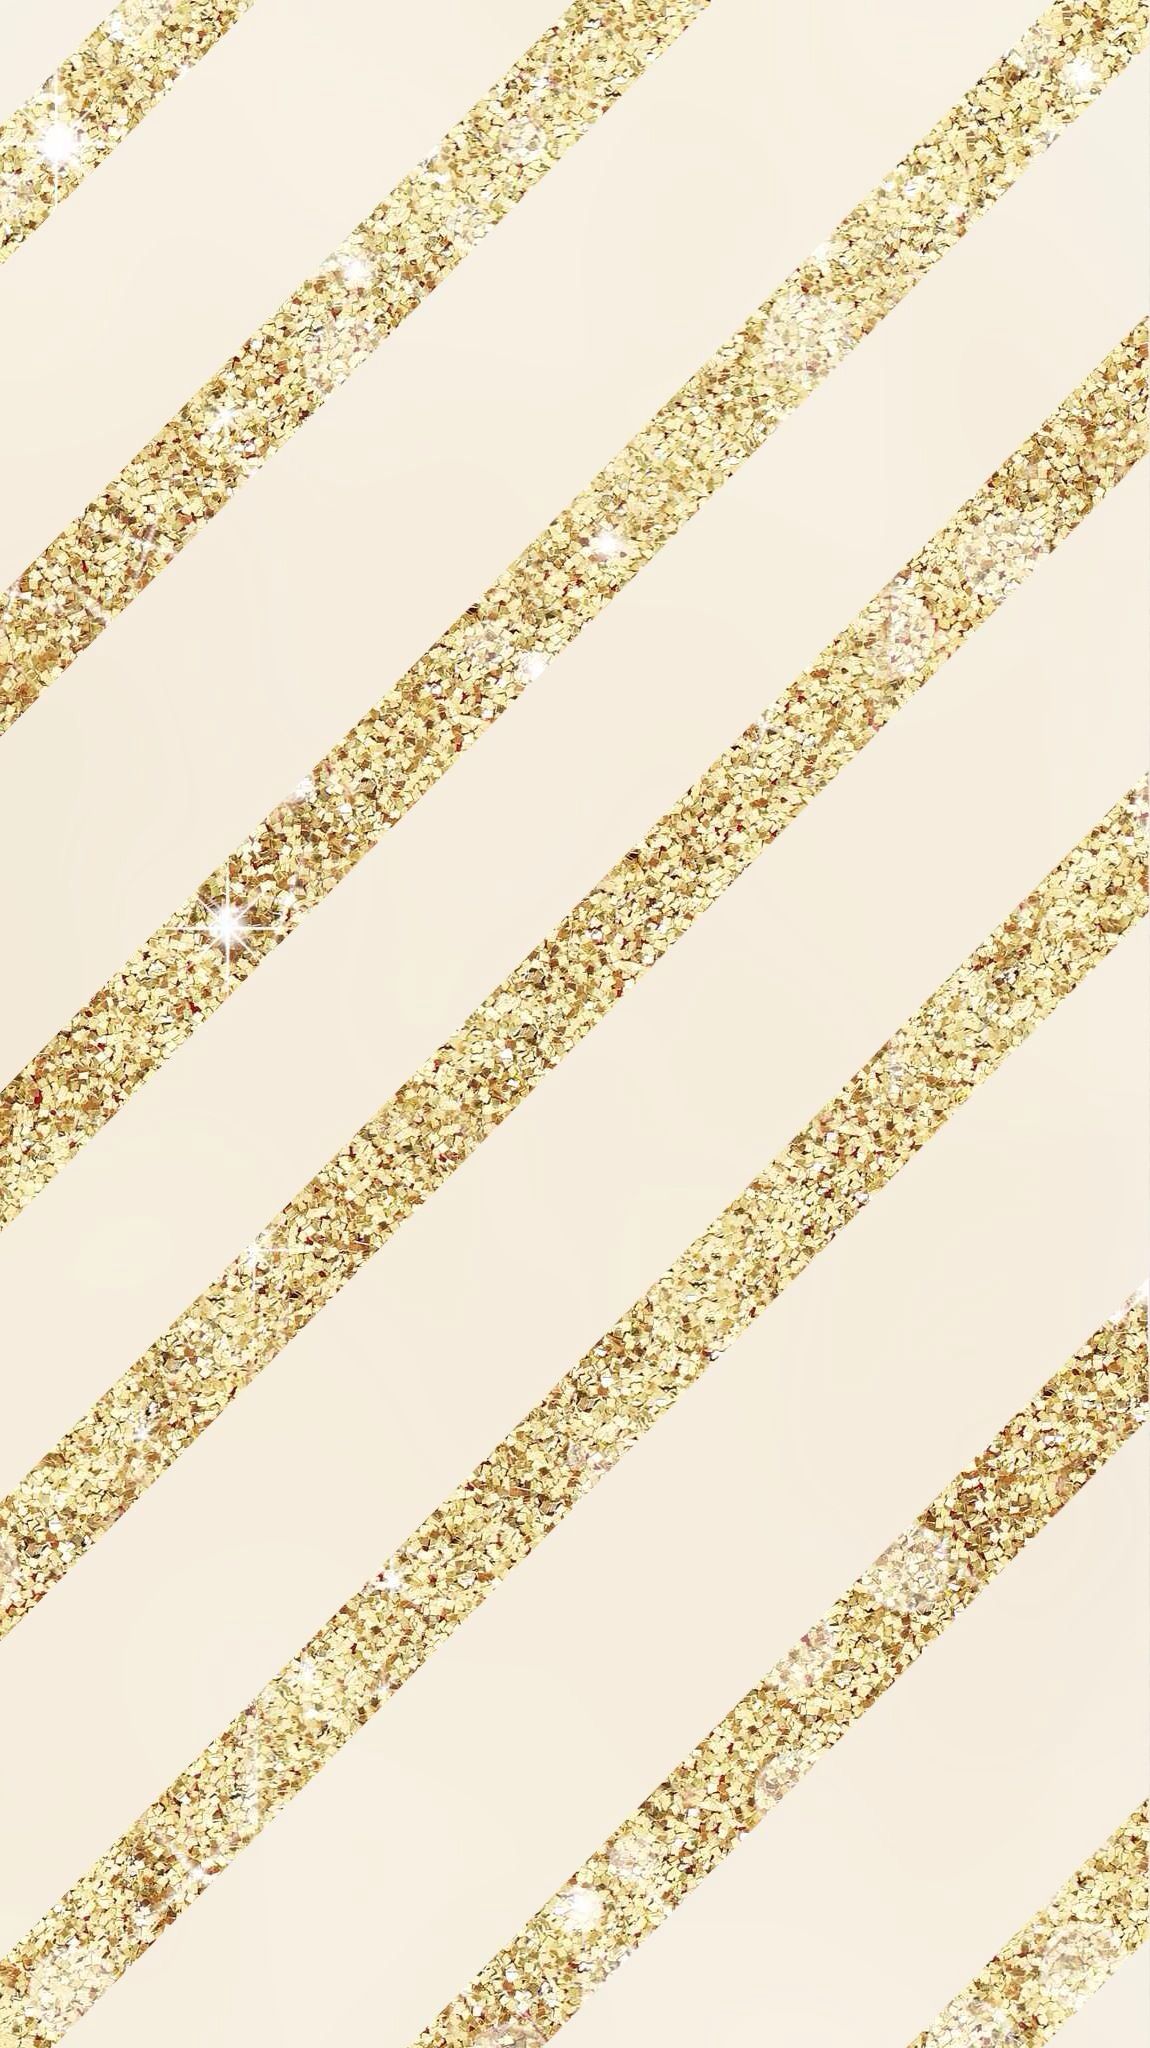 Gold Glitter Striped Pattern | Wallpaper/Cover Photos | Pinterest ...